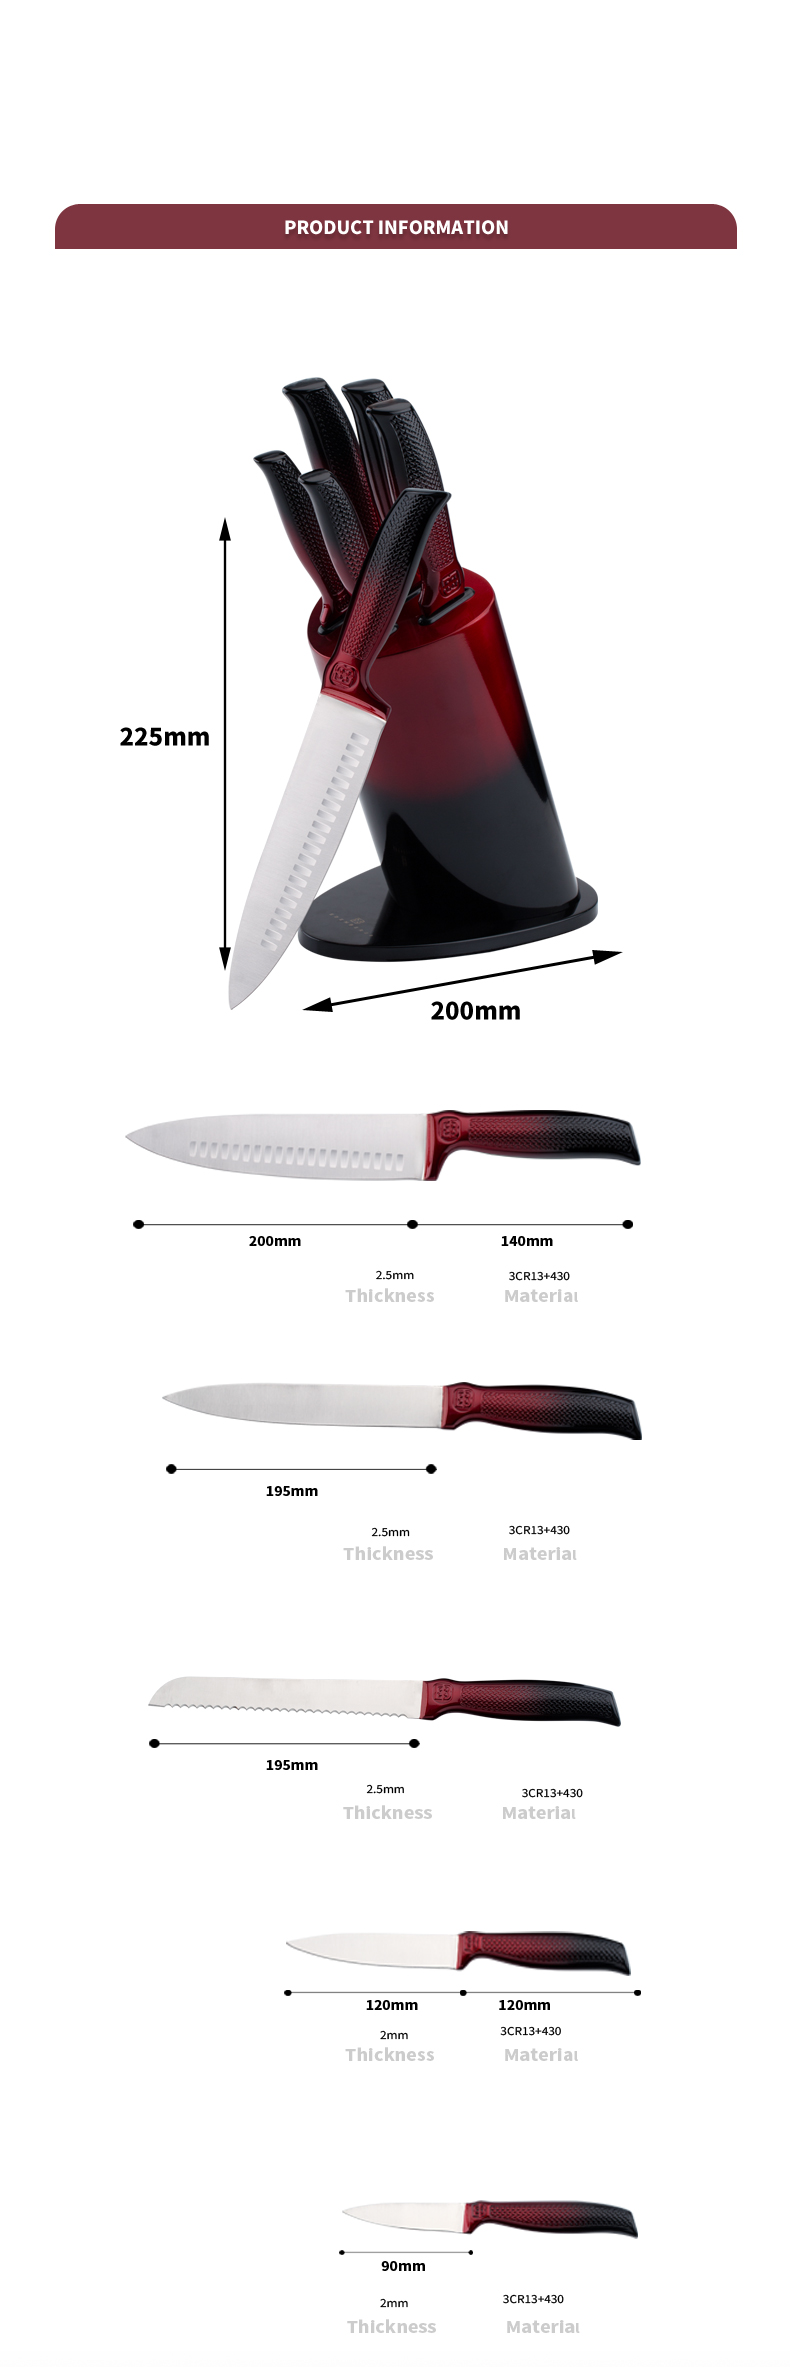 K129-Customized 5 Pcs 3cr13 Stainless Steel Kitchen Knife Chef Knife Set nga adunay Mabulukon nga Block-ZX | kutsilyo sa kusina, mga gamit sa kusina, Silicone Cake Mould, Cutting Board, Baking Tool Sets, Chef Knife, Steak Knife, Slicer knife, Utility Knife, Paring Knife, Knife block, Knife Stand, Santoku Knife, Knife sa bata, Plastic Knife, Non Stick Painting Kutsilyo, Mabulukon nga Knife, Stainless Steel Knife, Can opener, Bottle Opener, Tea Strainer, Grater, Egg Beater, Nylon Kitchen Tool, Silicone Kitchen Tool, Cookie Cutter, Cooking Knife Set, Knife Sharpener, Peeler, Cake Knife, Cheese Knife, Pizza Knife, Silicone Spatular, Silicone Spoon, Food Tong, Forged nga kutsilyo, Gunting sa Kusina, mga kutsilyo sa pagluto sa cake, Mga kutsilyo sa pagluto sa mga Bata, Knife